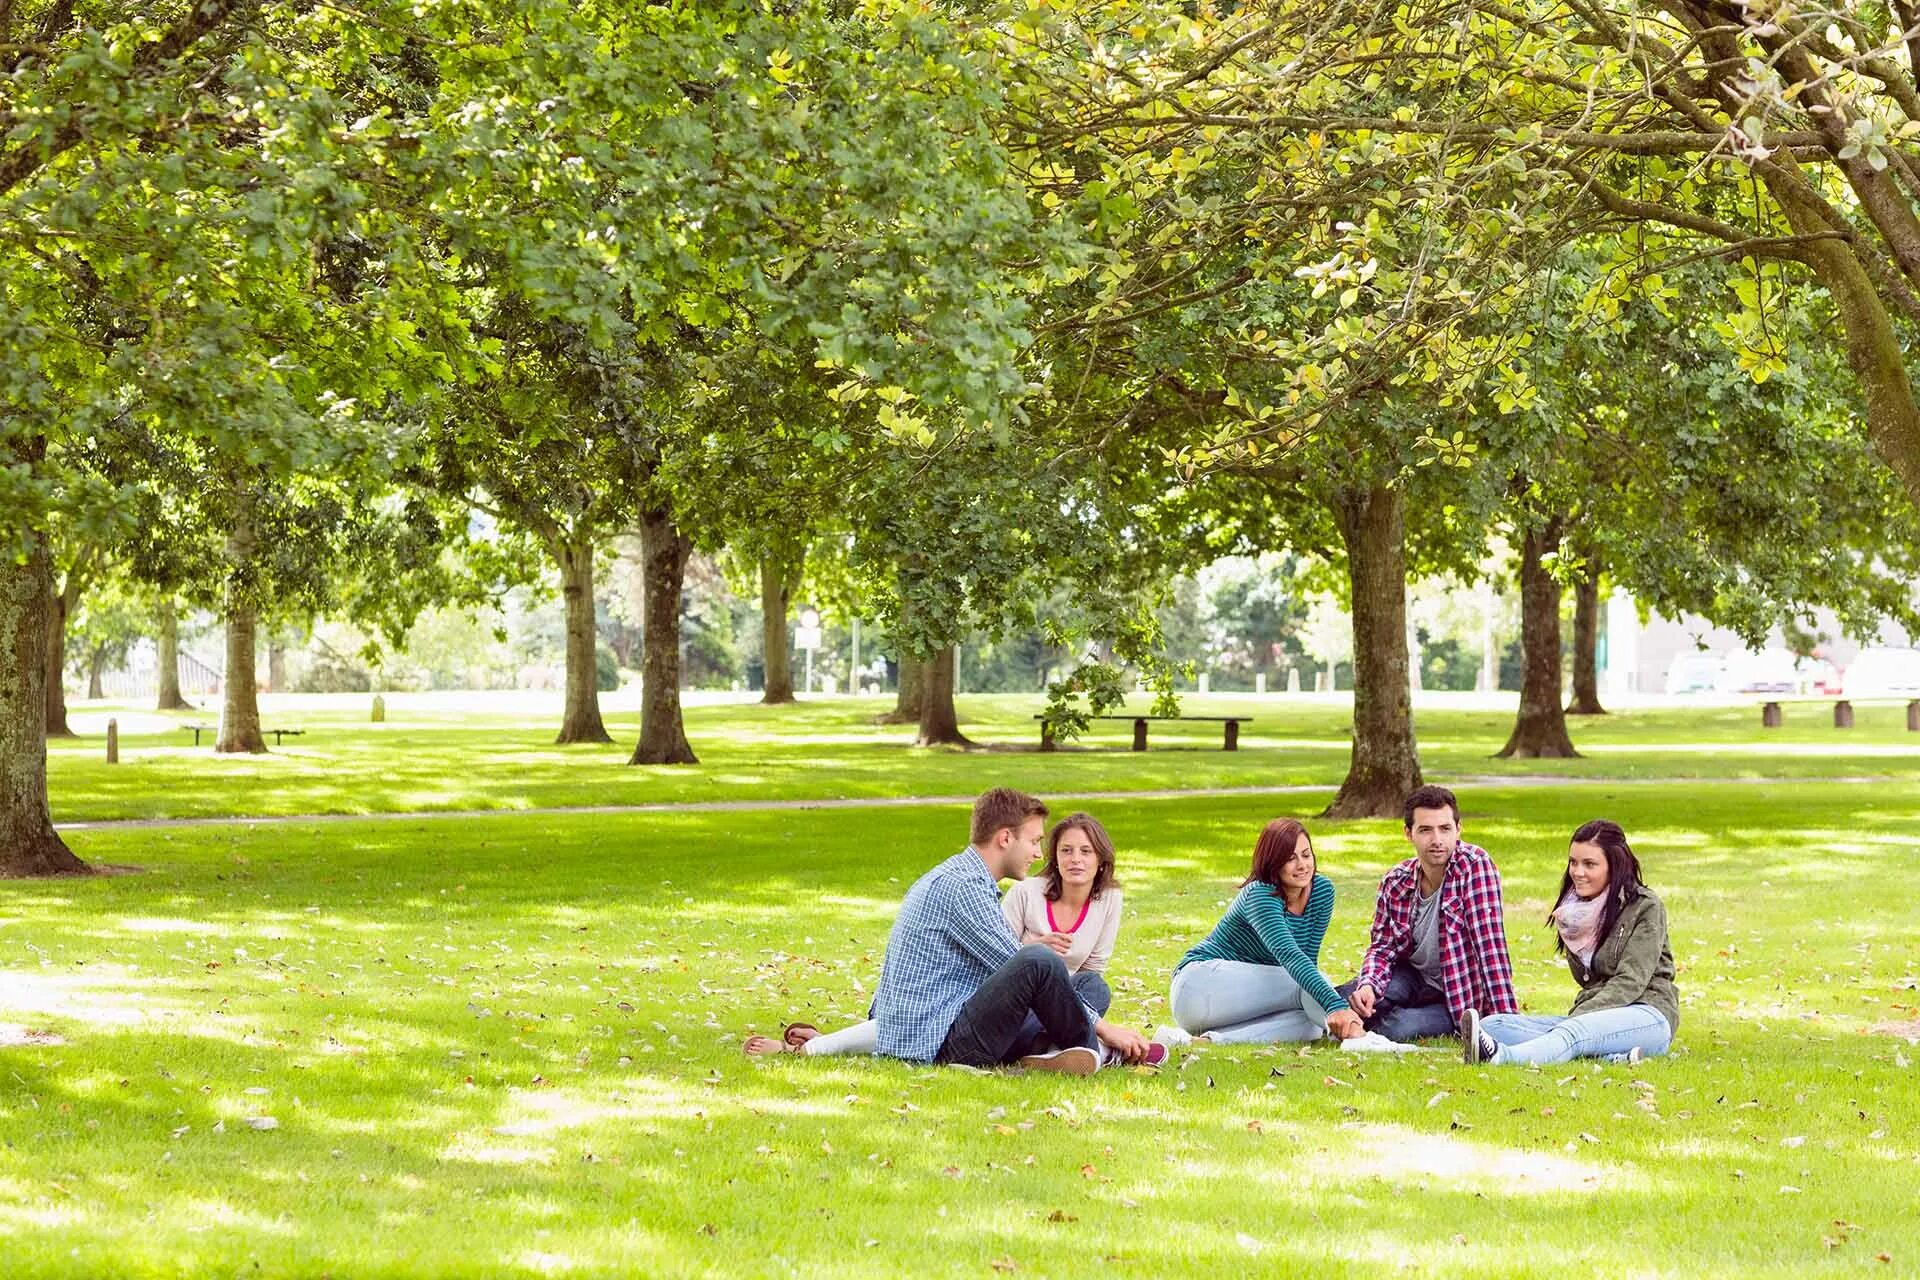 Student park. Люди в парке. Люди на траве в парке. Люди на лужайке в парке. Люди отдыхают в парке.